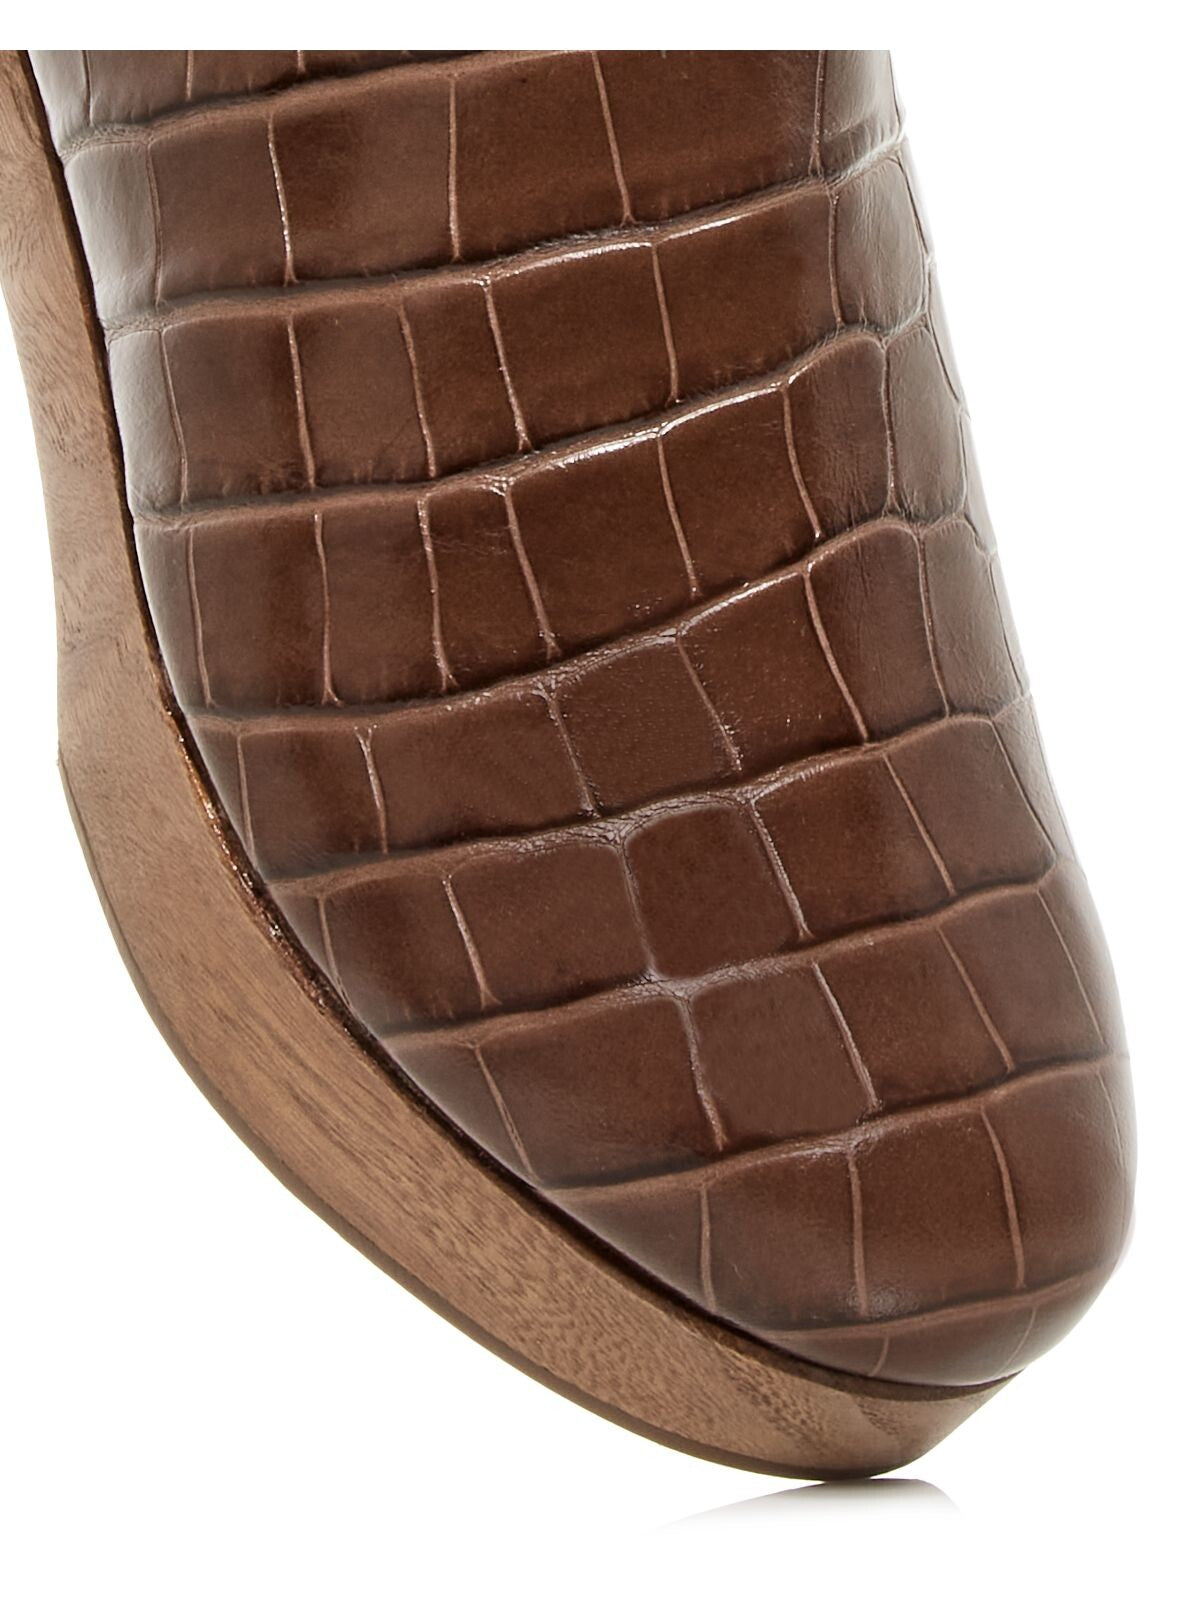 AQUA Womens Brown Crocodile Comfort Round Toe Block Heel Slip On Leather Clogs Shoes